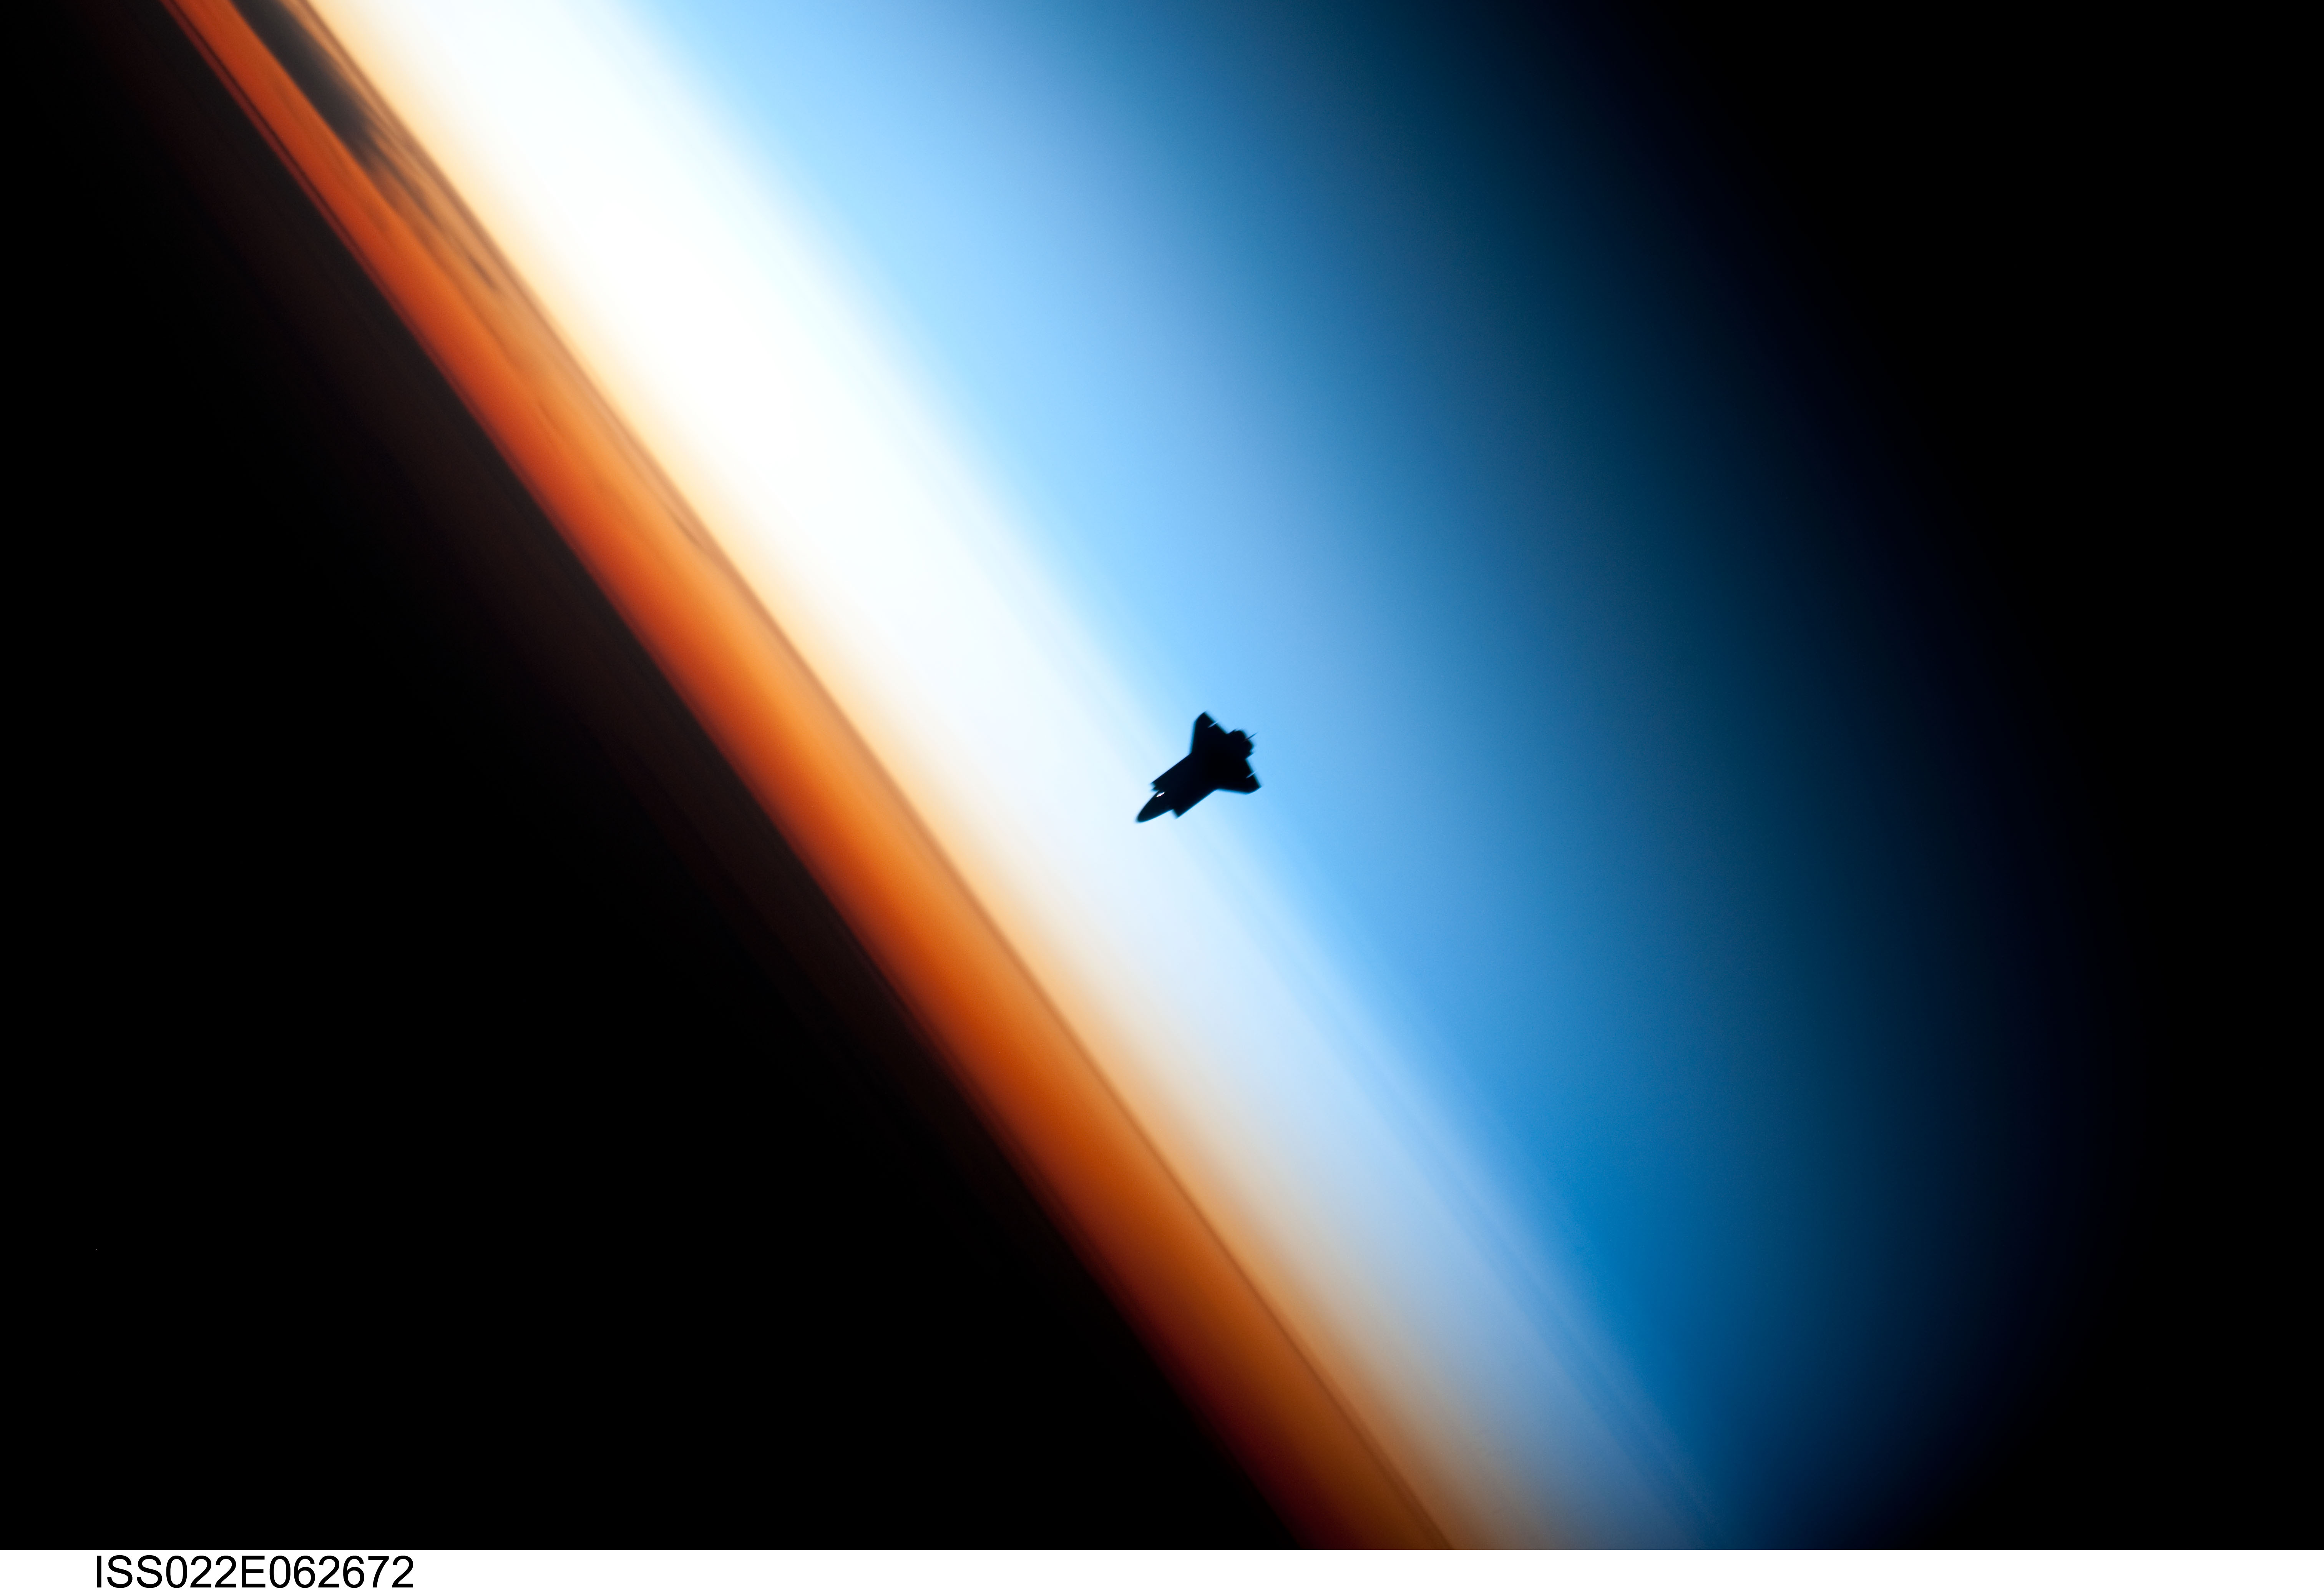 Photo of a space shuttle in orbit